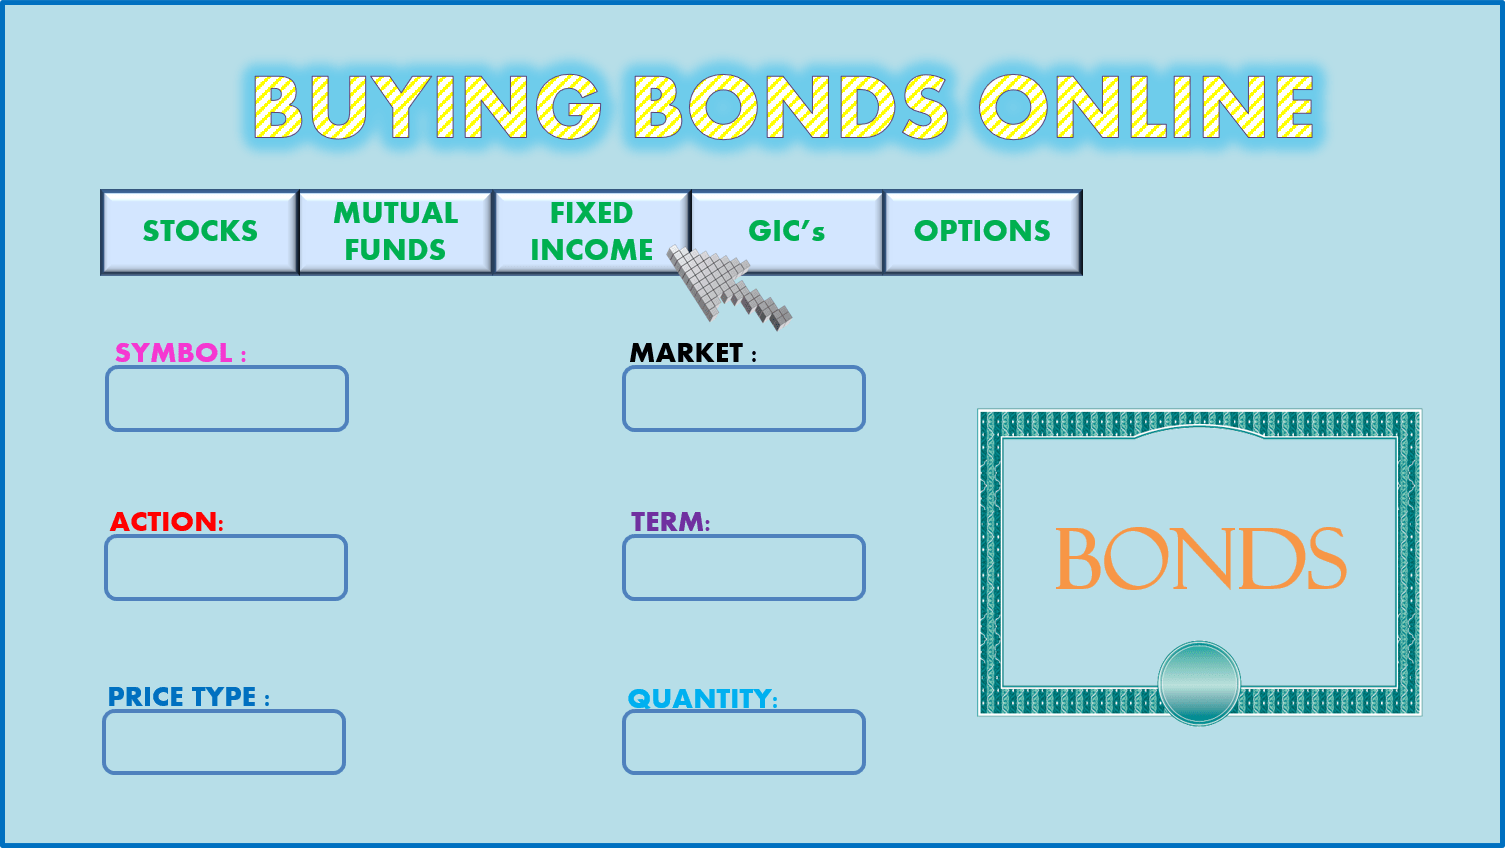 BUYING BONDS ONLINE & ADVANCED BOND TERMS